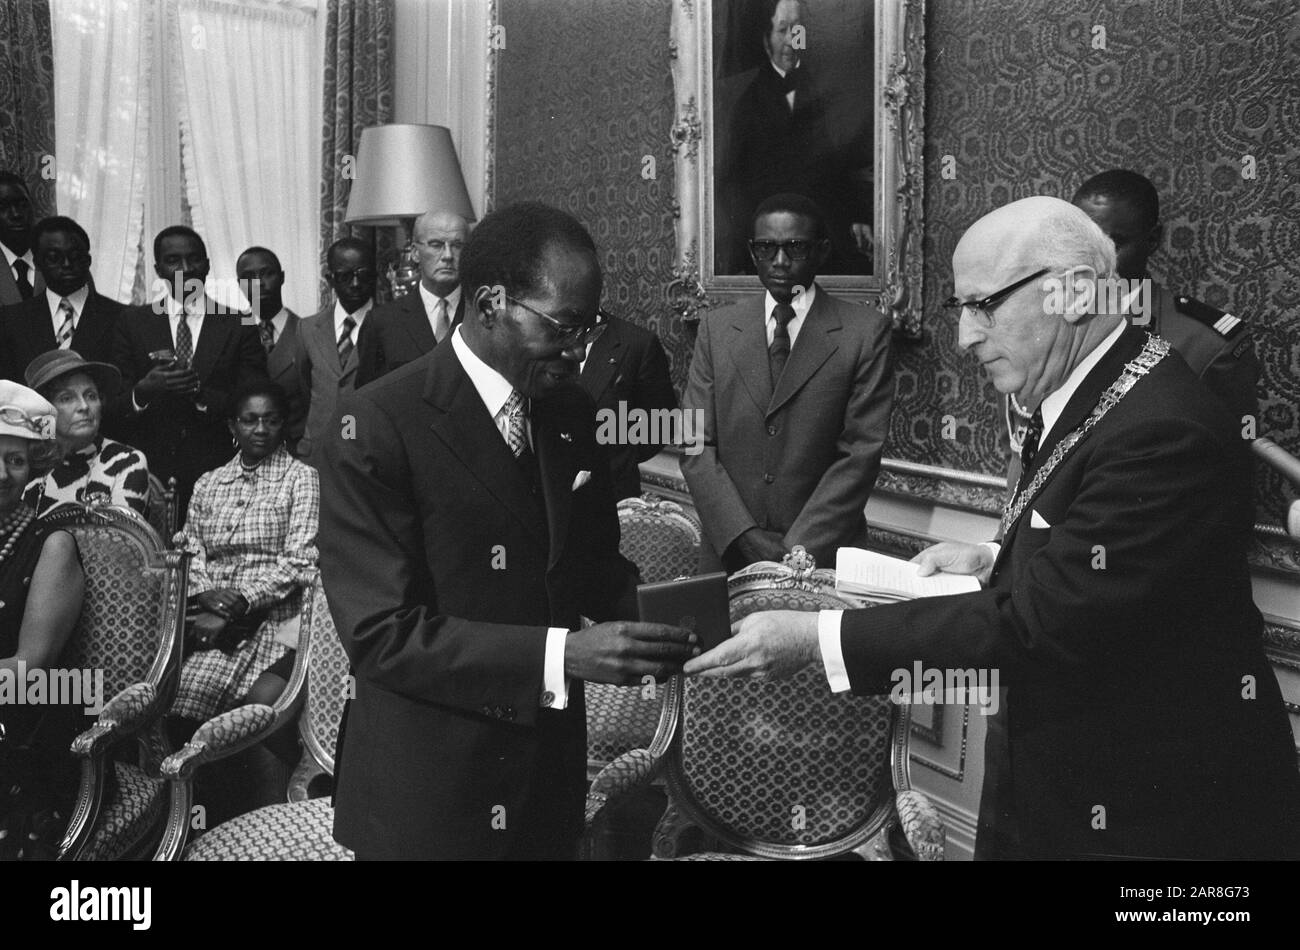 State visit President Senghor of Senegal to the Netherlands Senghor received by Mayor Samkalden Date: October 22, 1974 Keywords: mayors, receipts, presidents, state visits Stock Photo